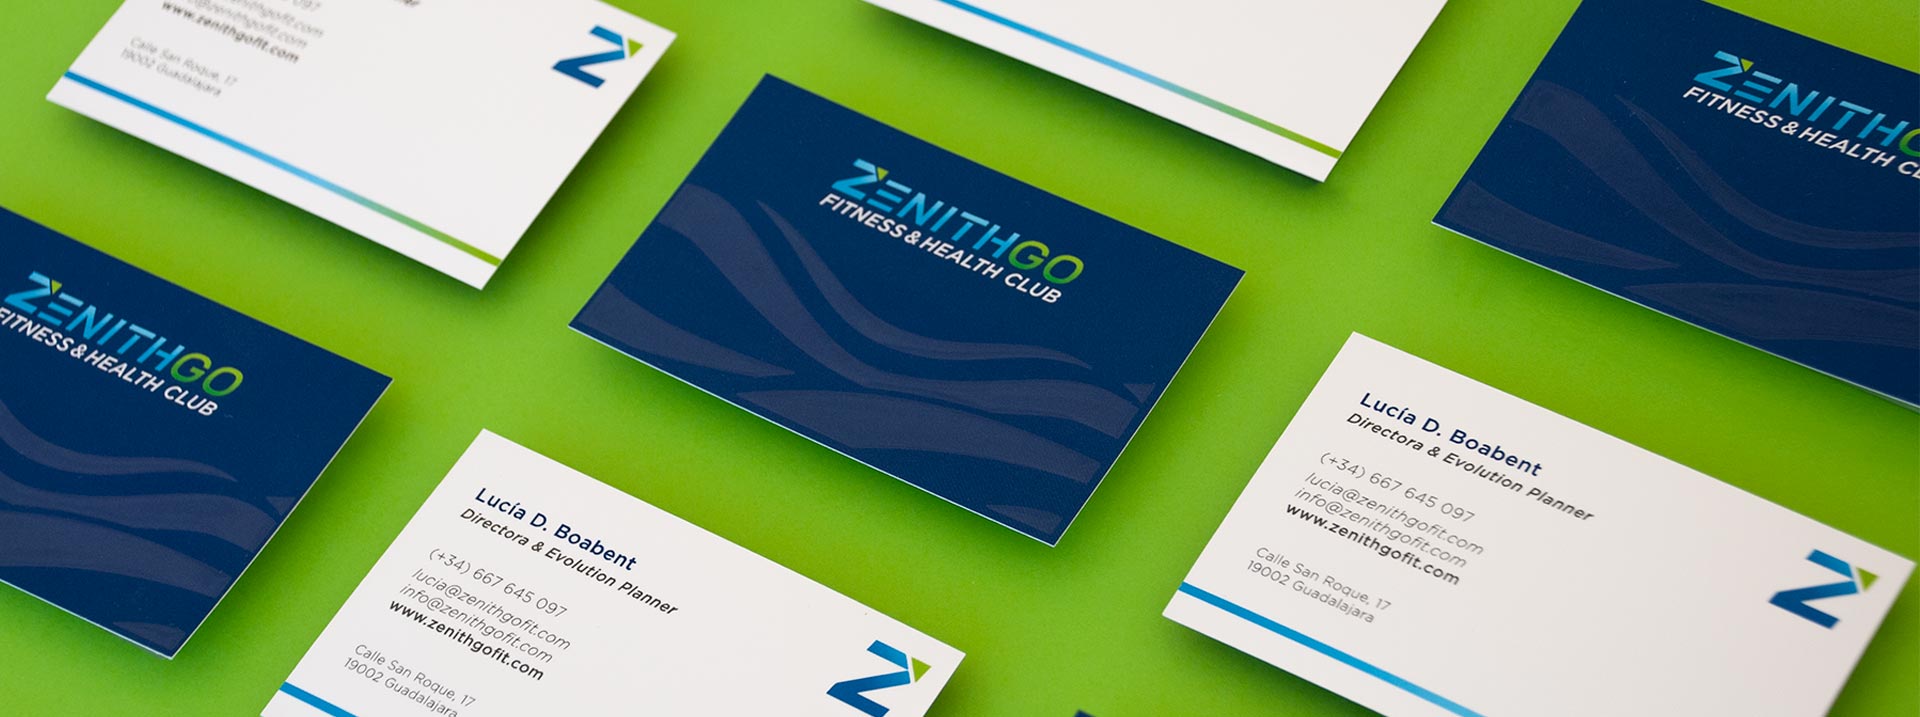 giset design zenith go tarjeta de visita y logo